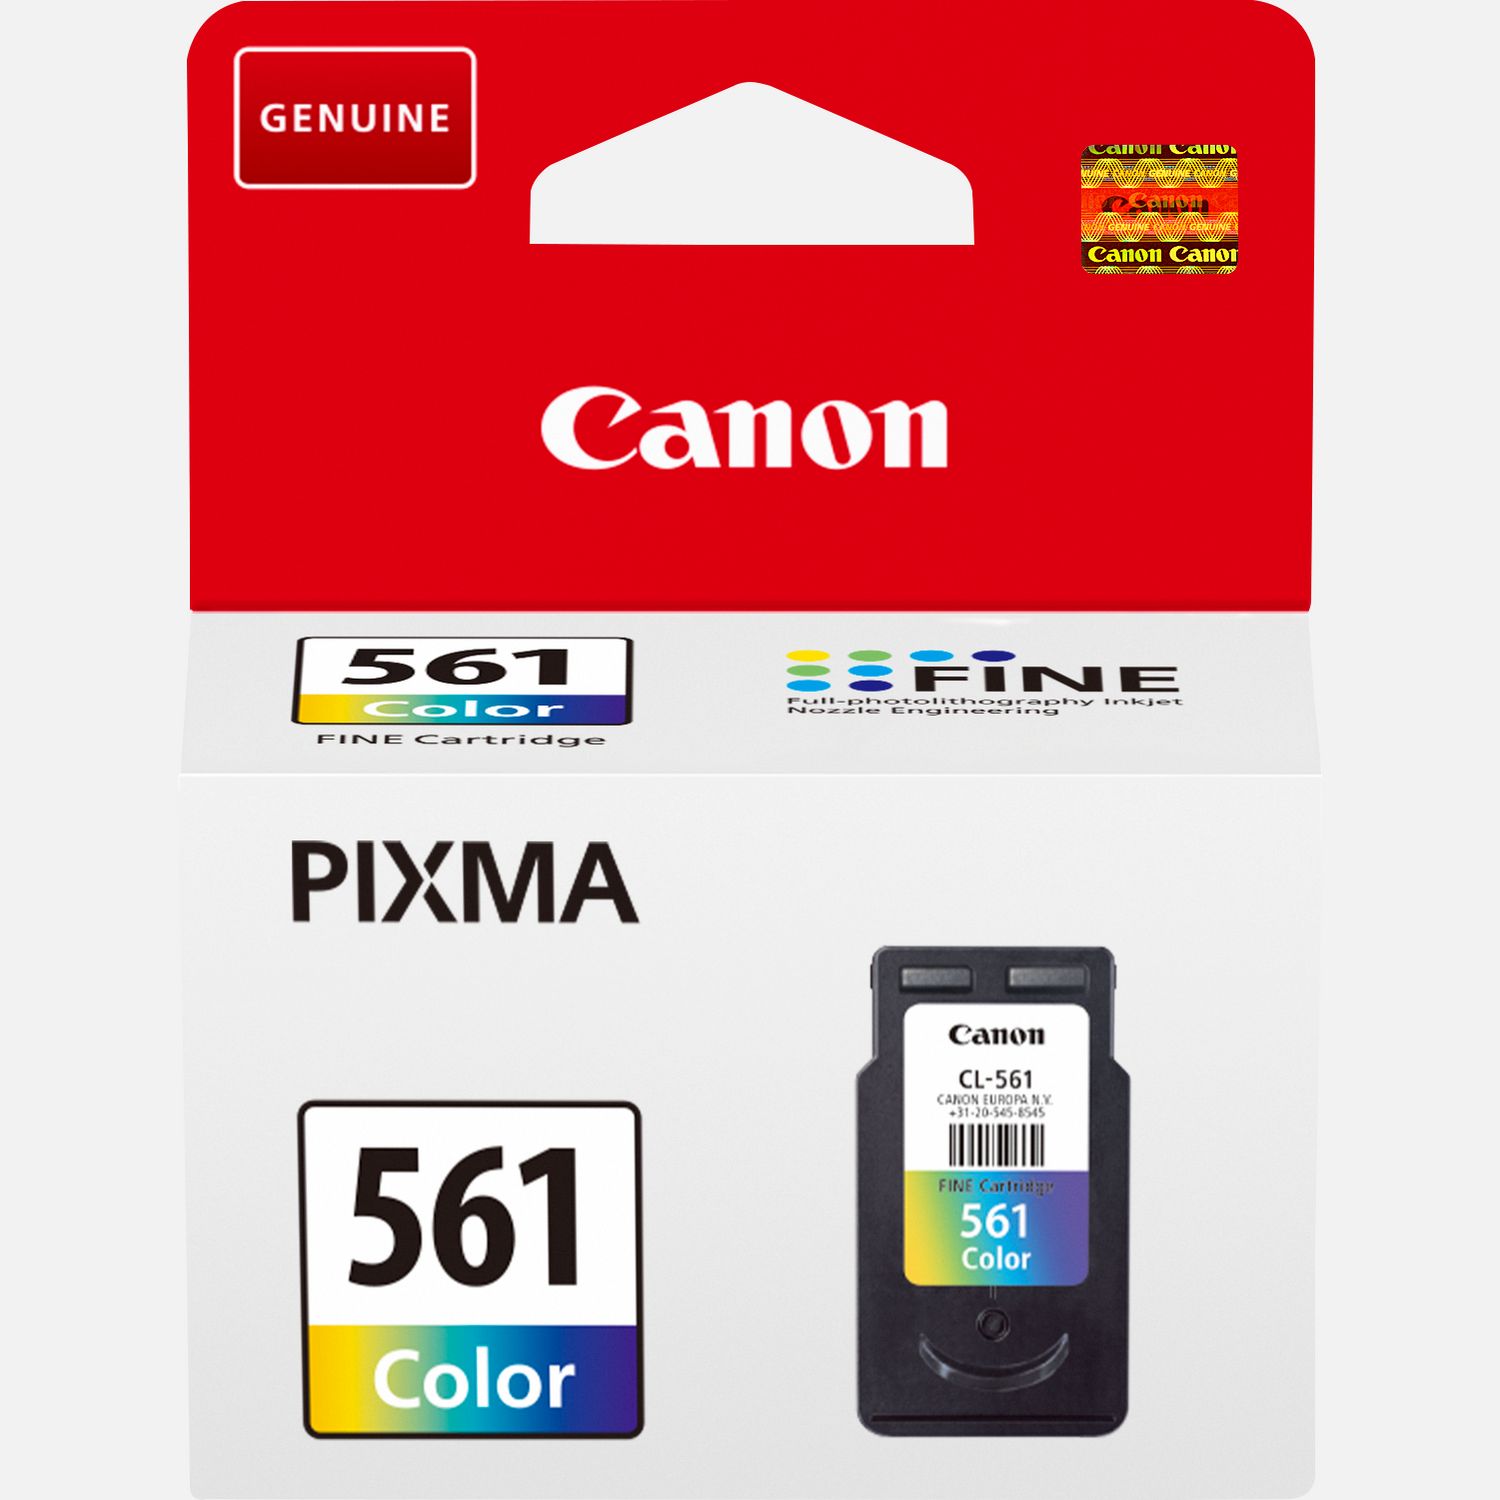 Canon PG-561 - Cartucho de Tinta Original Color - Para Impresoras Pixma TS5350, TS5351, TS5352, TS5351 - PG561